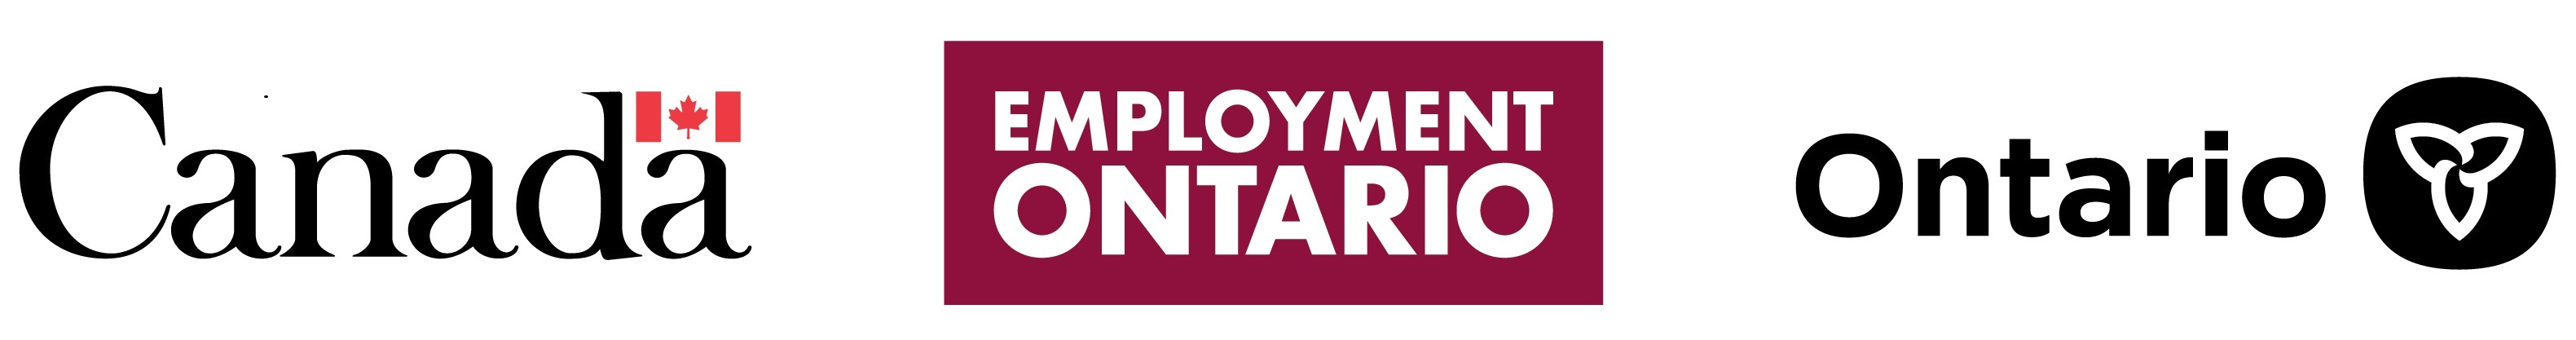 Government of Canada, Employment Ontario, and Ontario Government logos